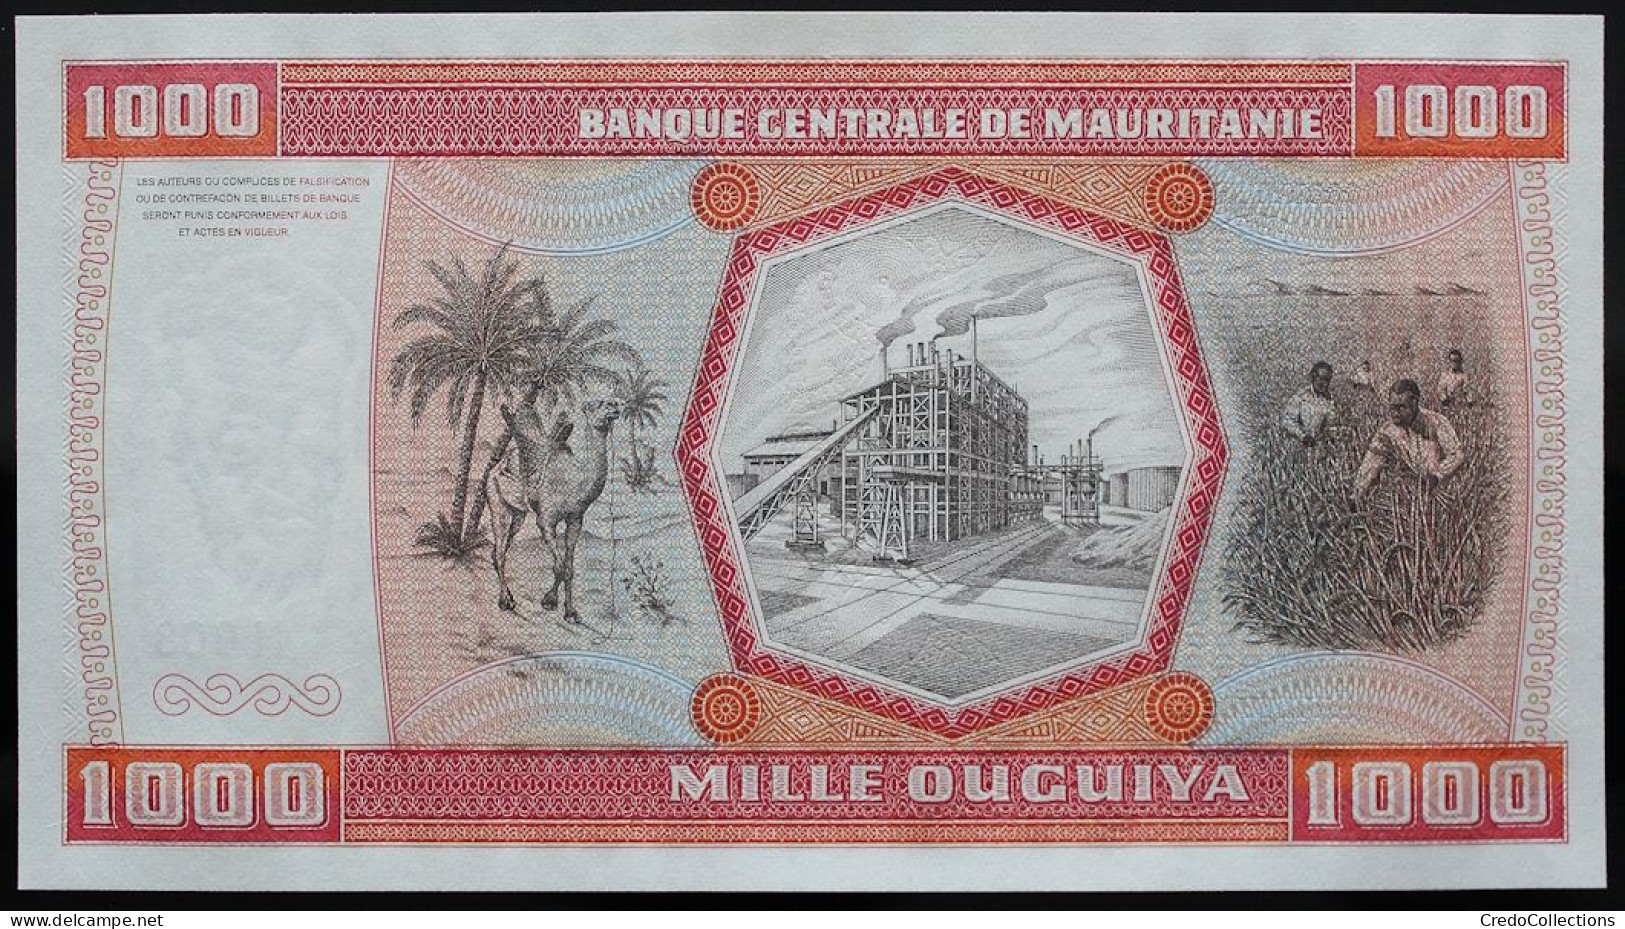 Mauritanie - 1000 Ouguiya - 1981 - PICK 3Da - NEUF - Mauritanien